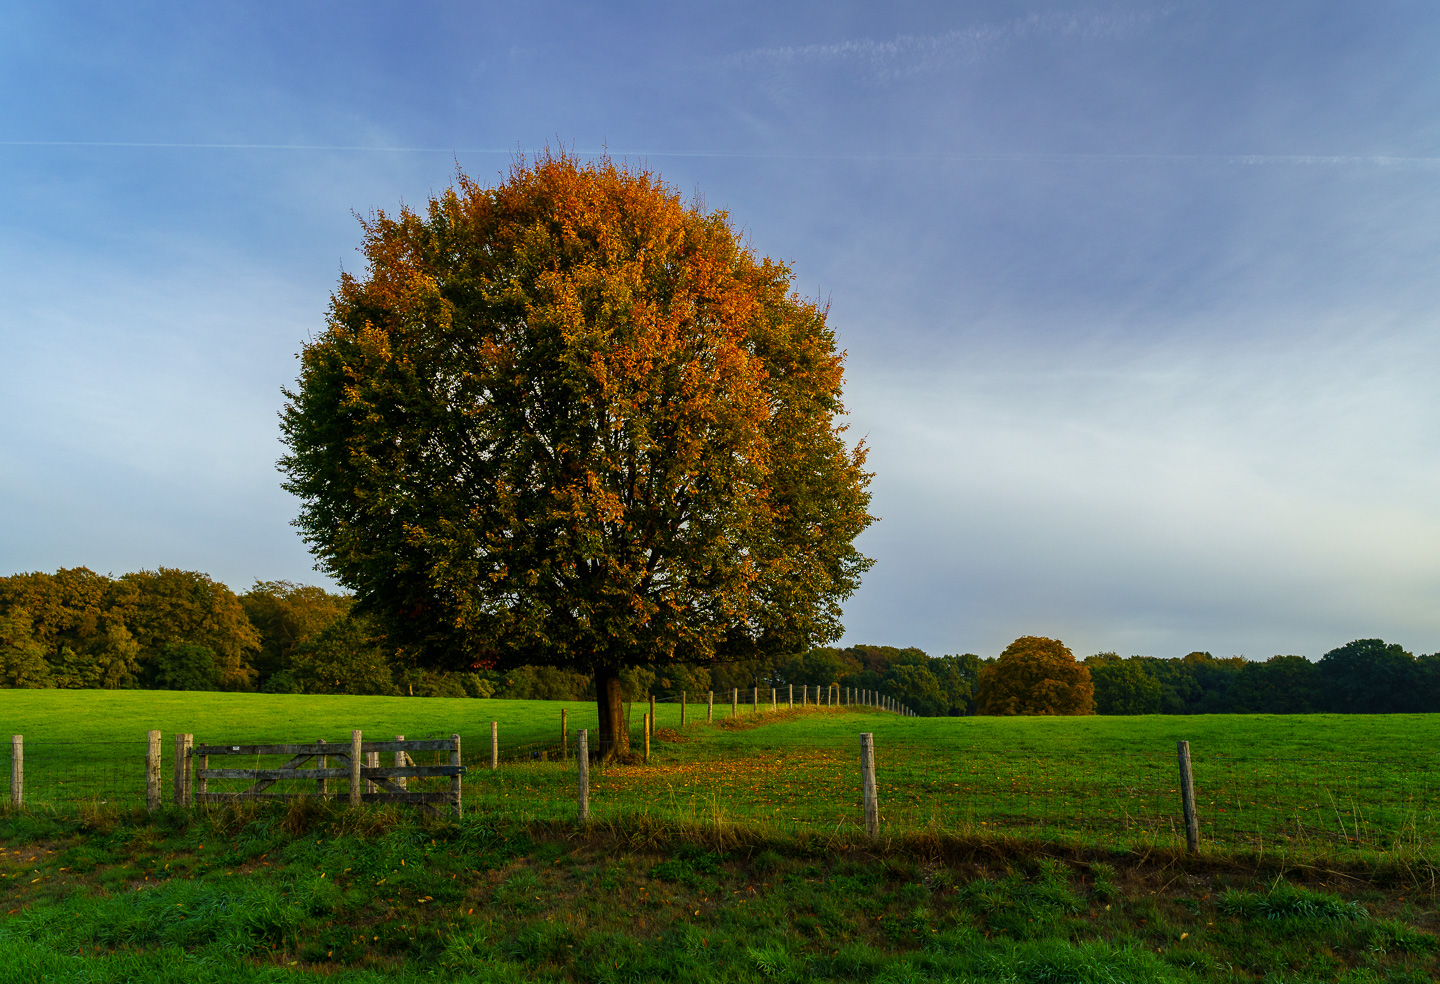 Arnhem, Klarenbeek, Herfst, Oktober, nldazuu fotografeert, autumn, fall, herfst